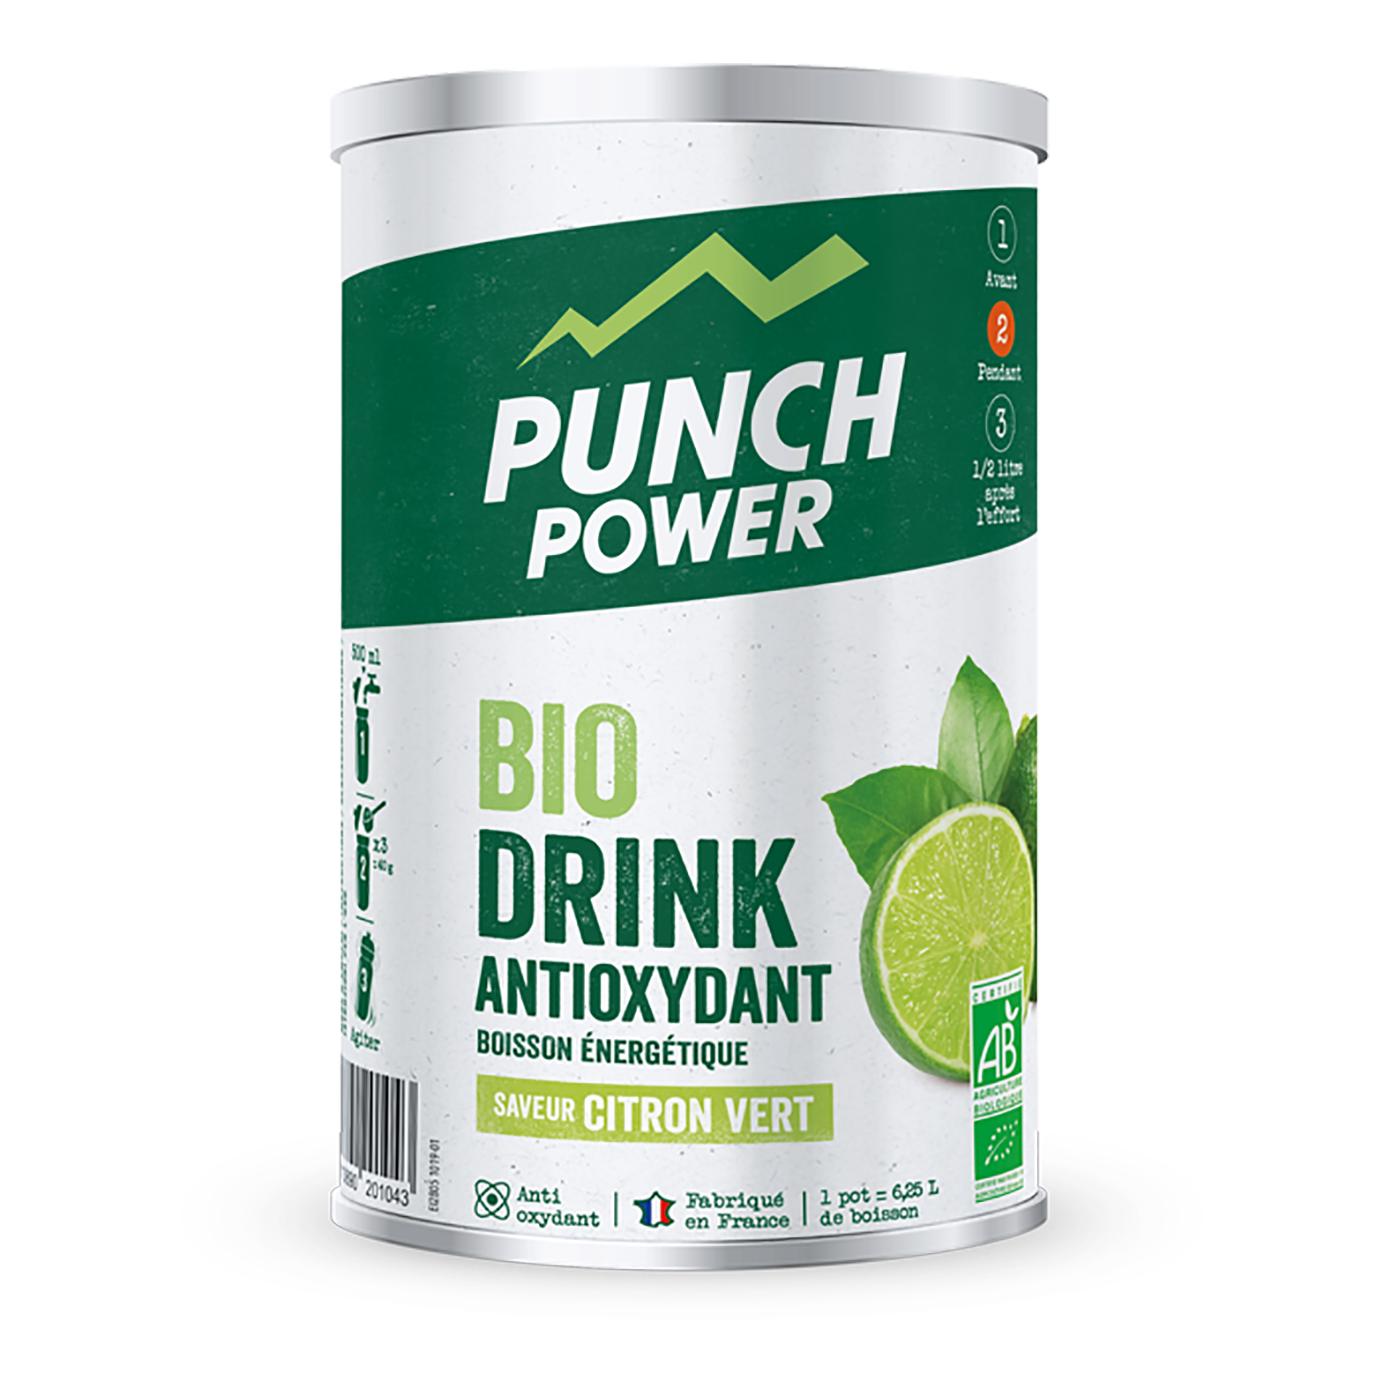 Punch Power Biodrink Citron Vert Antioxydant 500g 